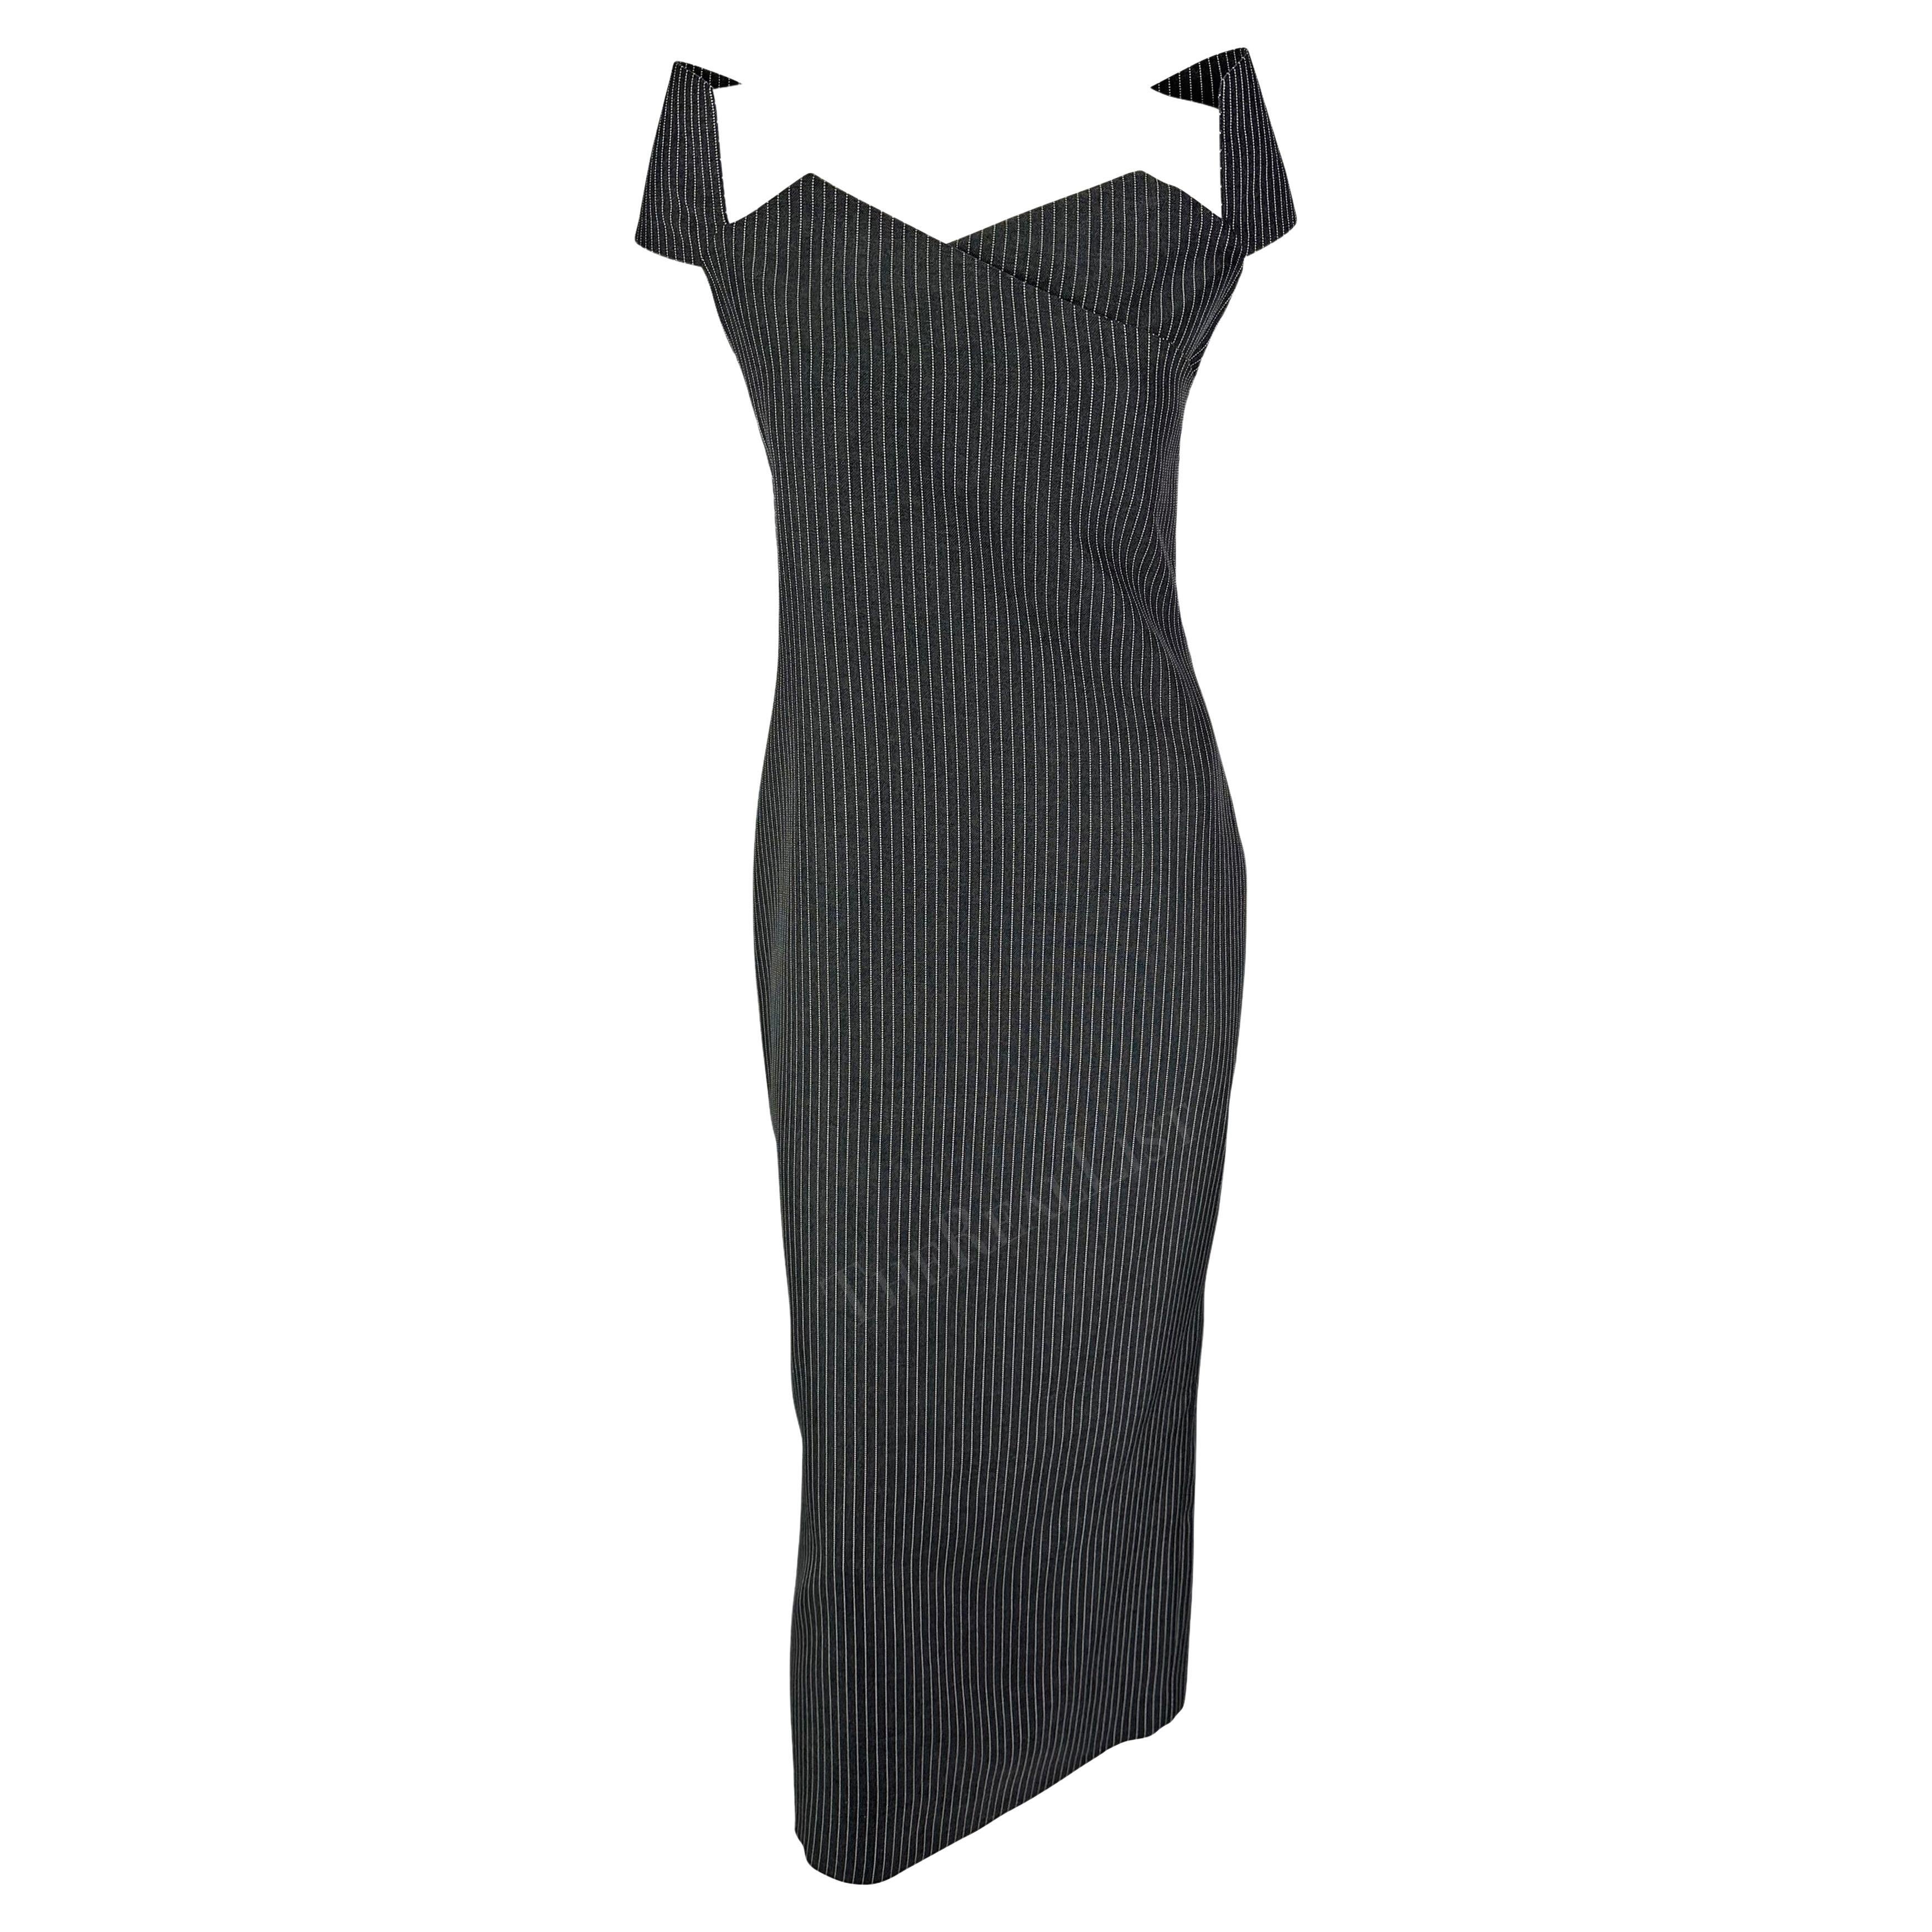 S/S 1996 Gianfranco Ferré Runway Grey Charcoal Pinstripe Off-Shoulder Dress For Sale